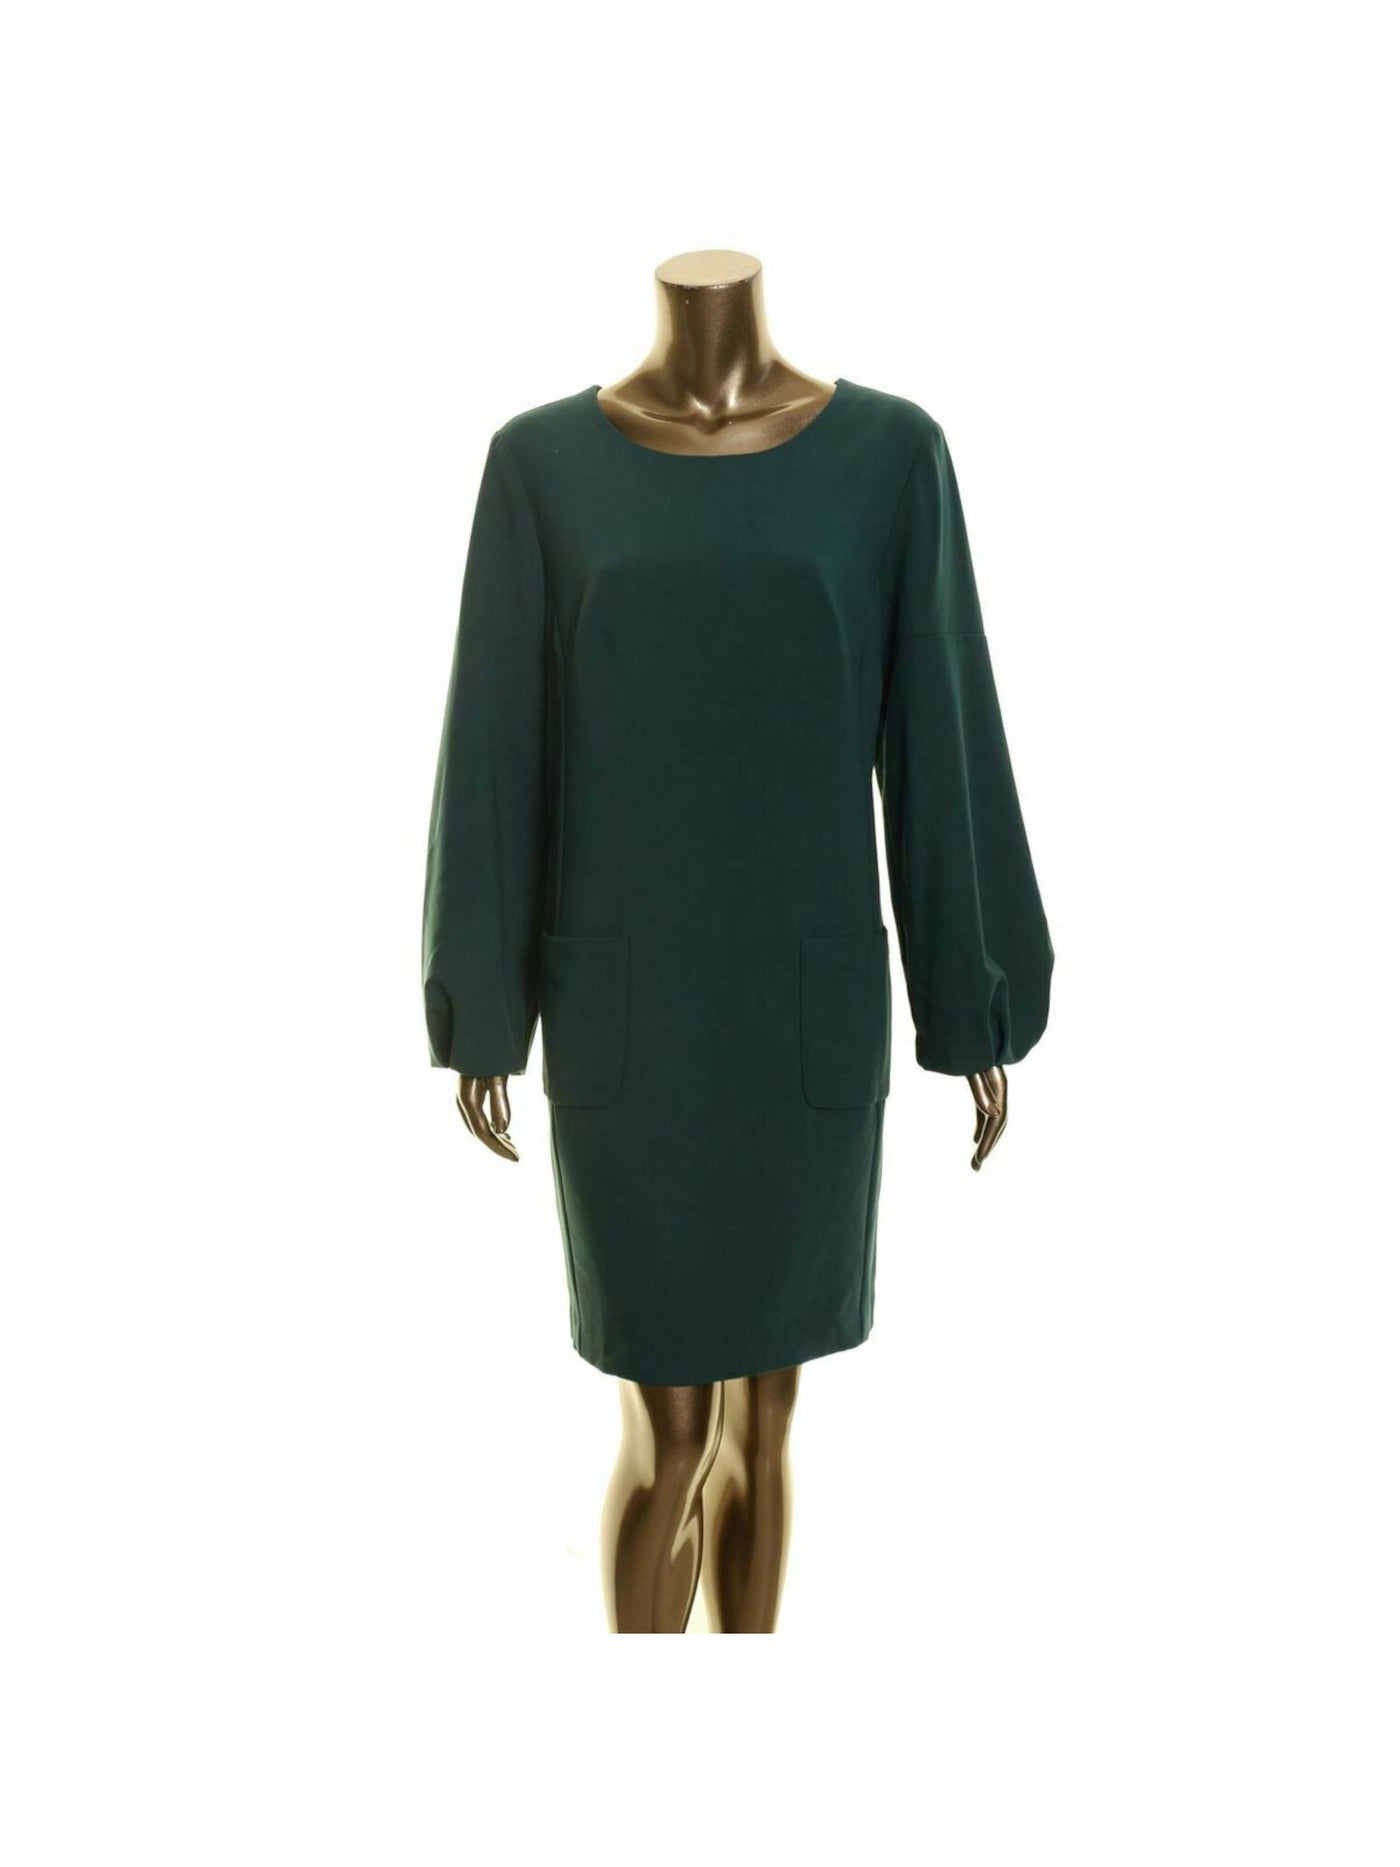 TRINA TURK Womens Green Pocketed Long Sleeve Jewel Neck Above The Knee Evening Shift Dress 0